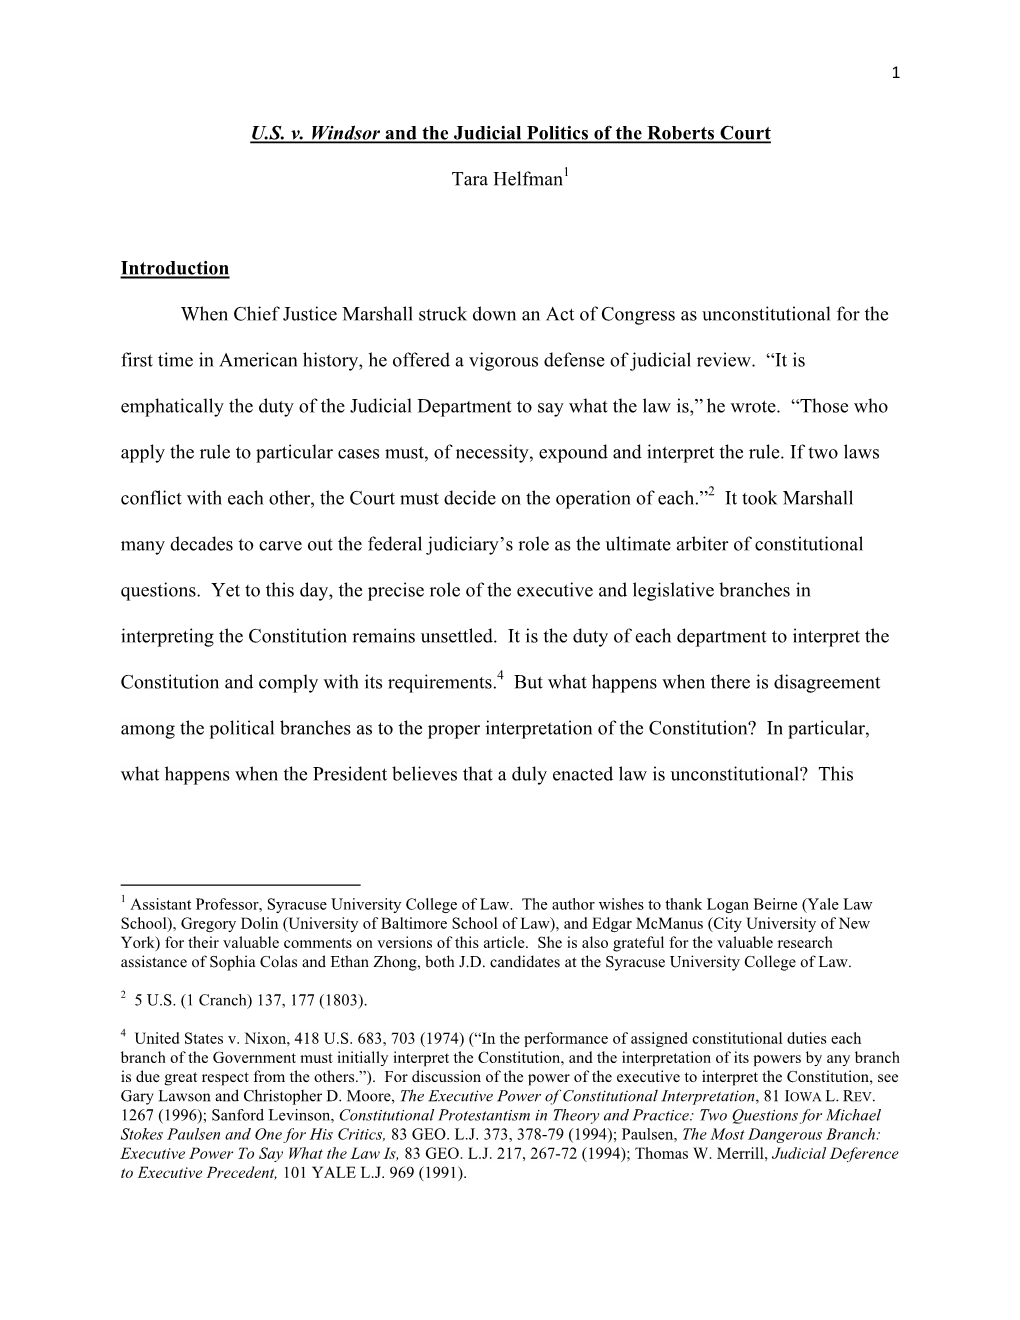 U.S. V. Windsor and the Judicial Politics of the Roberts Court Tara